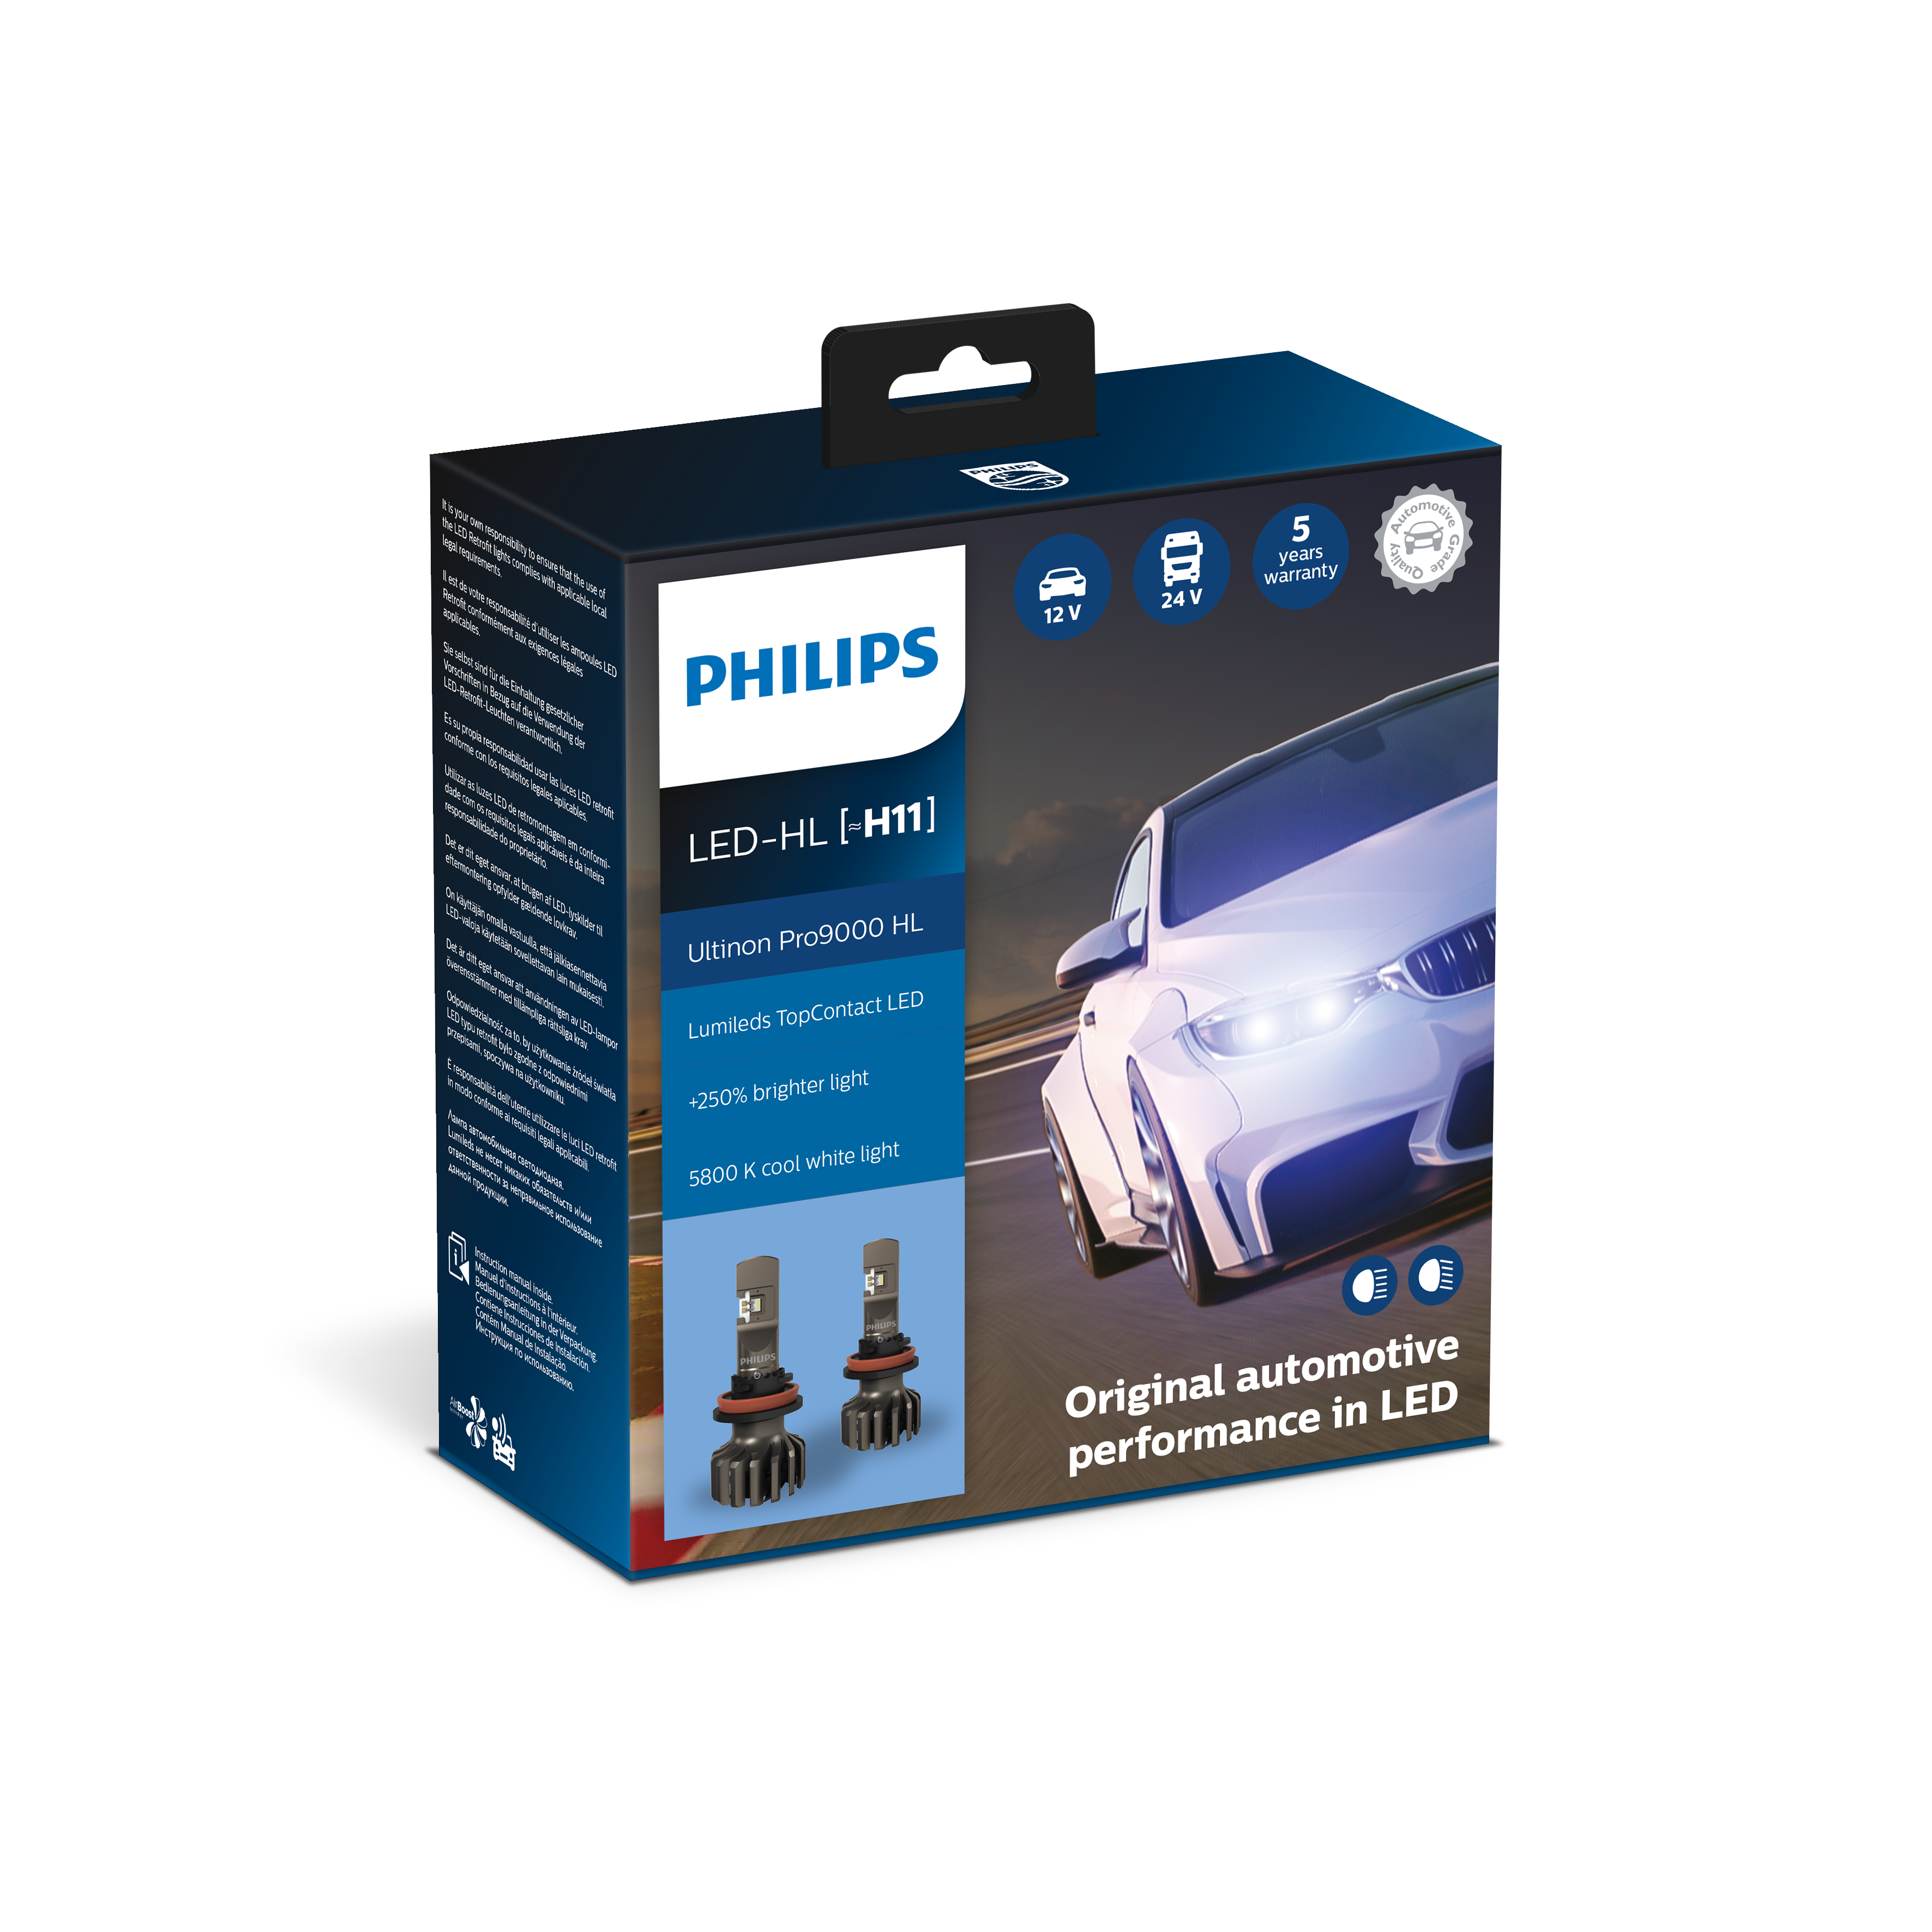 Филипс авто. Philips Ultinon 9000 h7. Philips Ultinon pro9000. Лампа автомобильная Philips Ultinon pro9000 hl led h7. Philips Ultinon pro9000 h1.